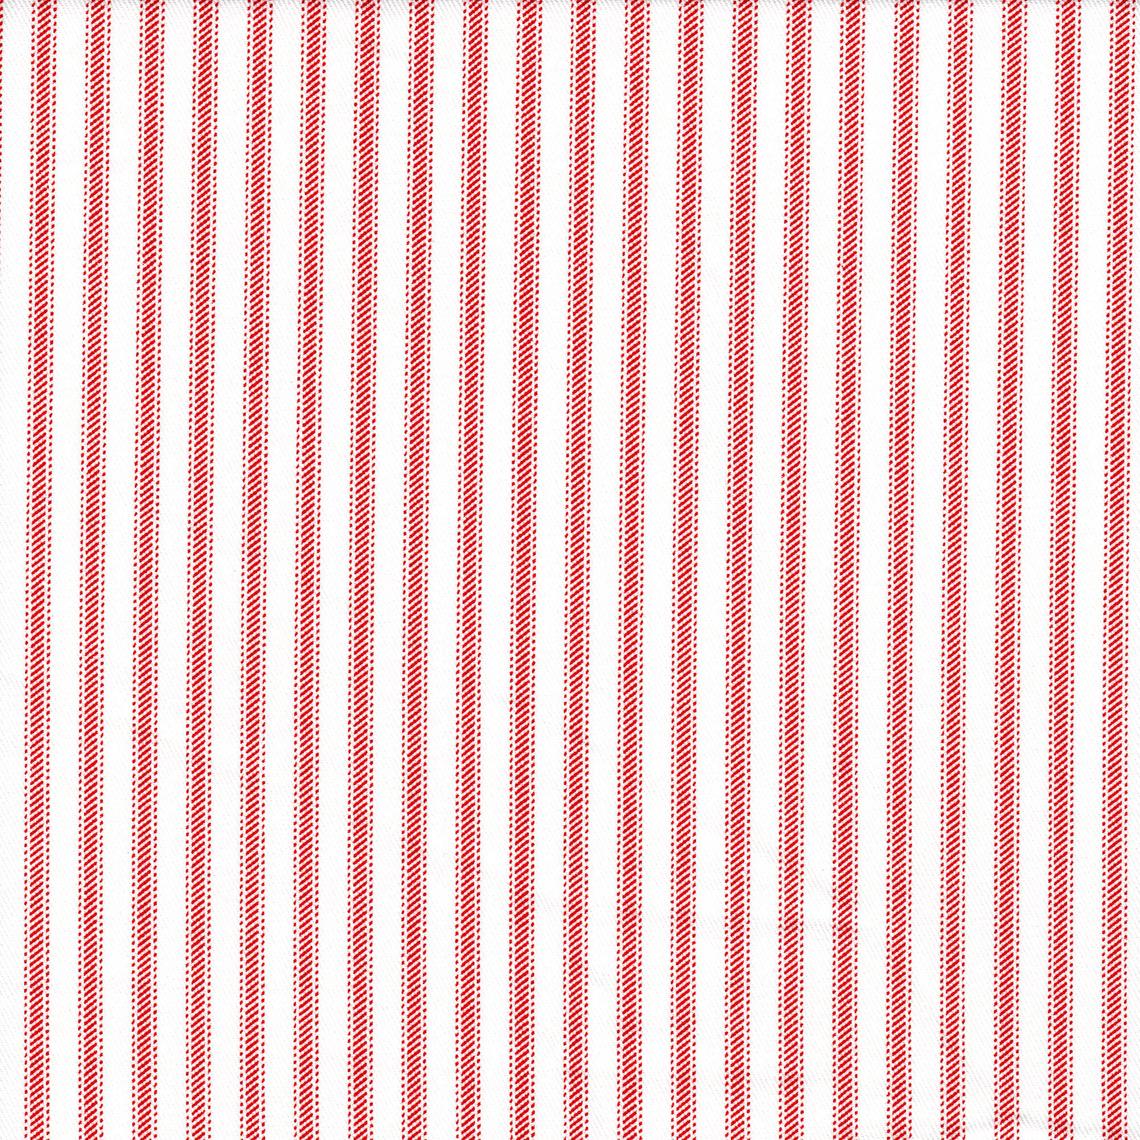 duvet cover in classic lipstick red ticking stripe on white